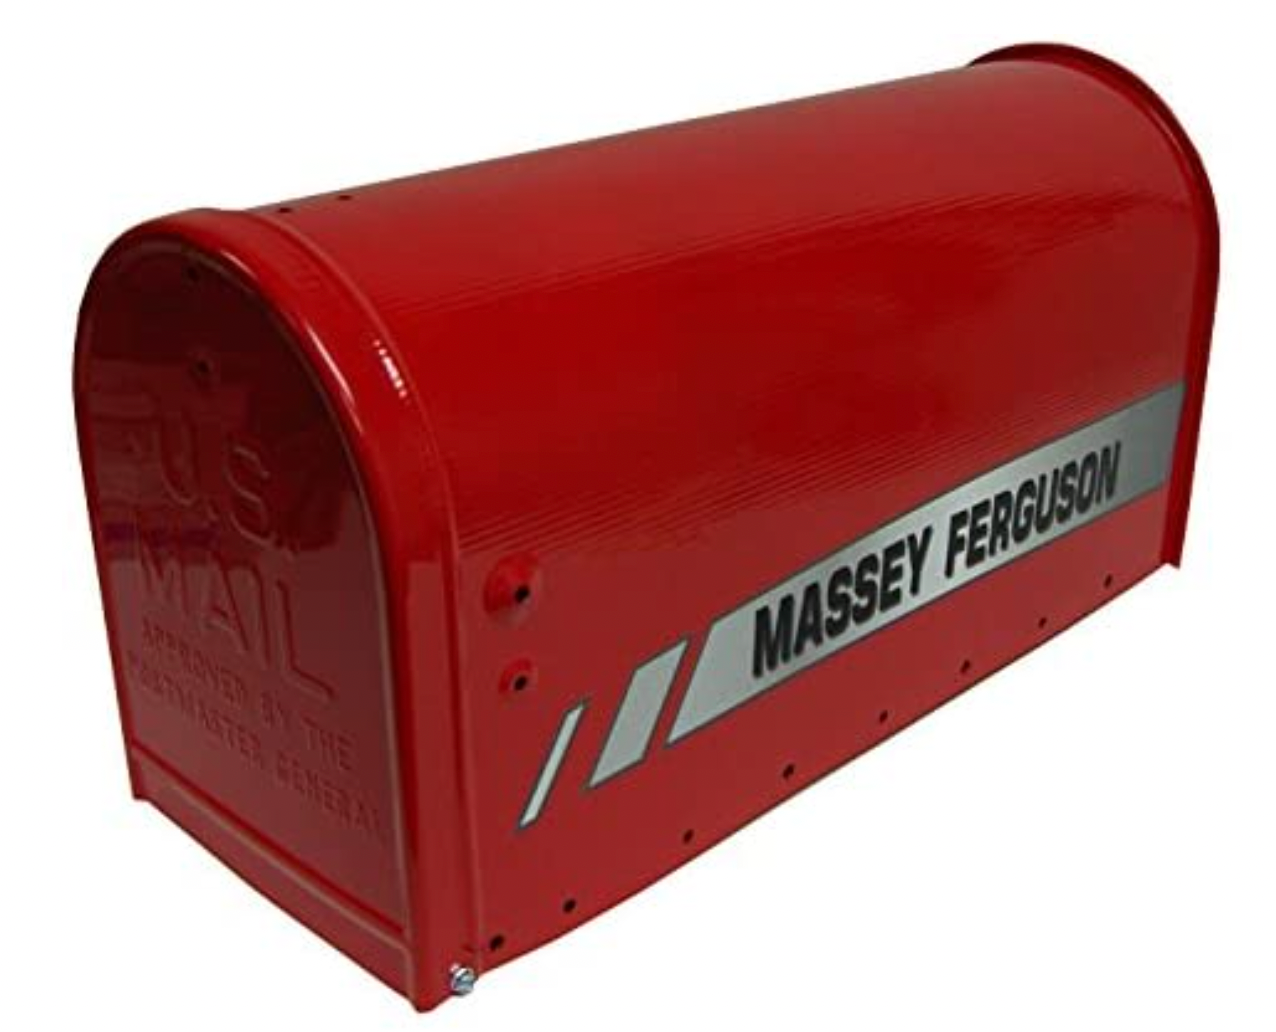 Massey Ferguson Rural Style Mailbox